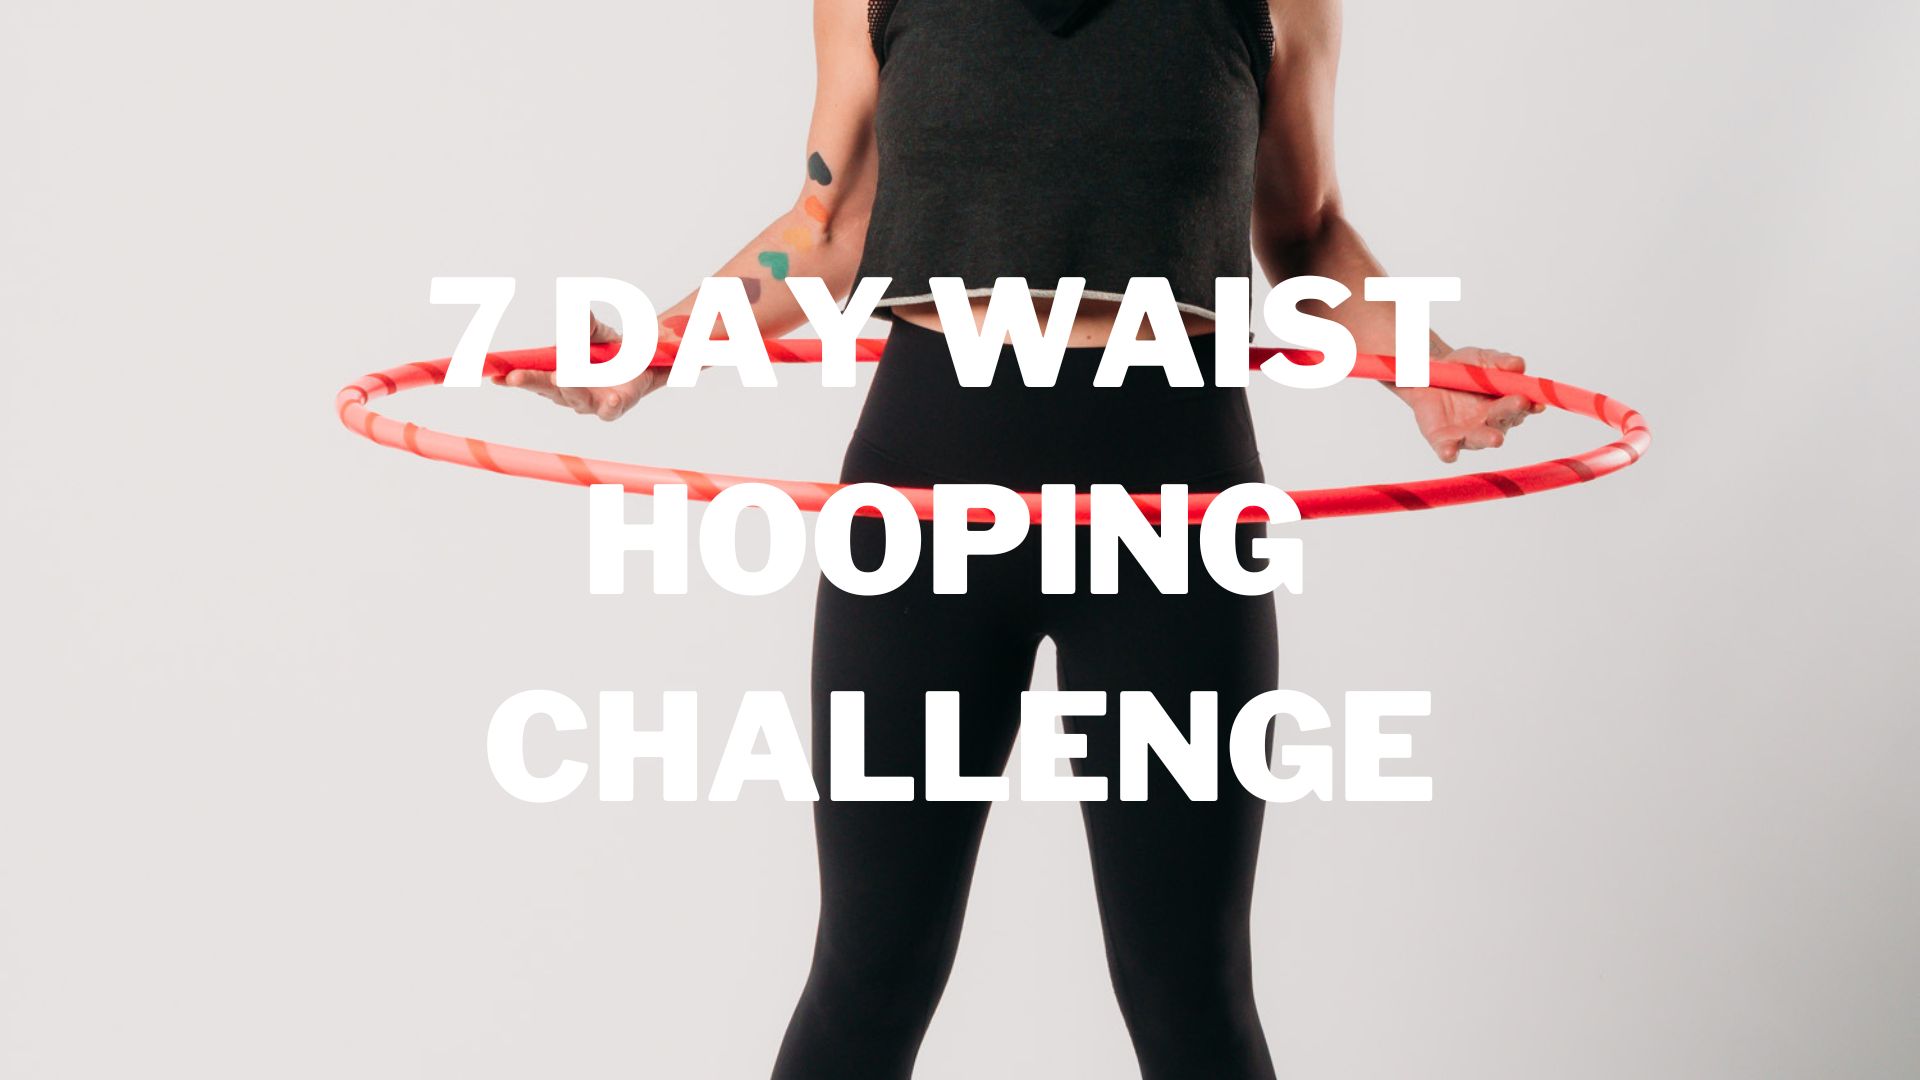 7 day waist hooping challenge learn to hoop